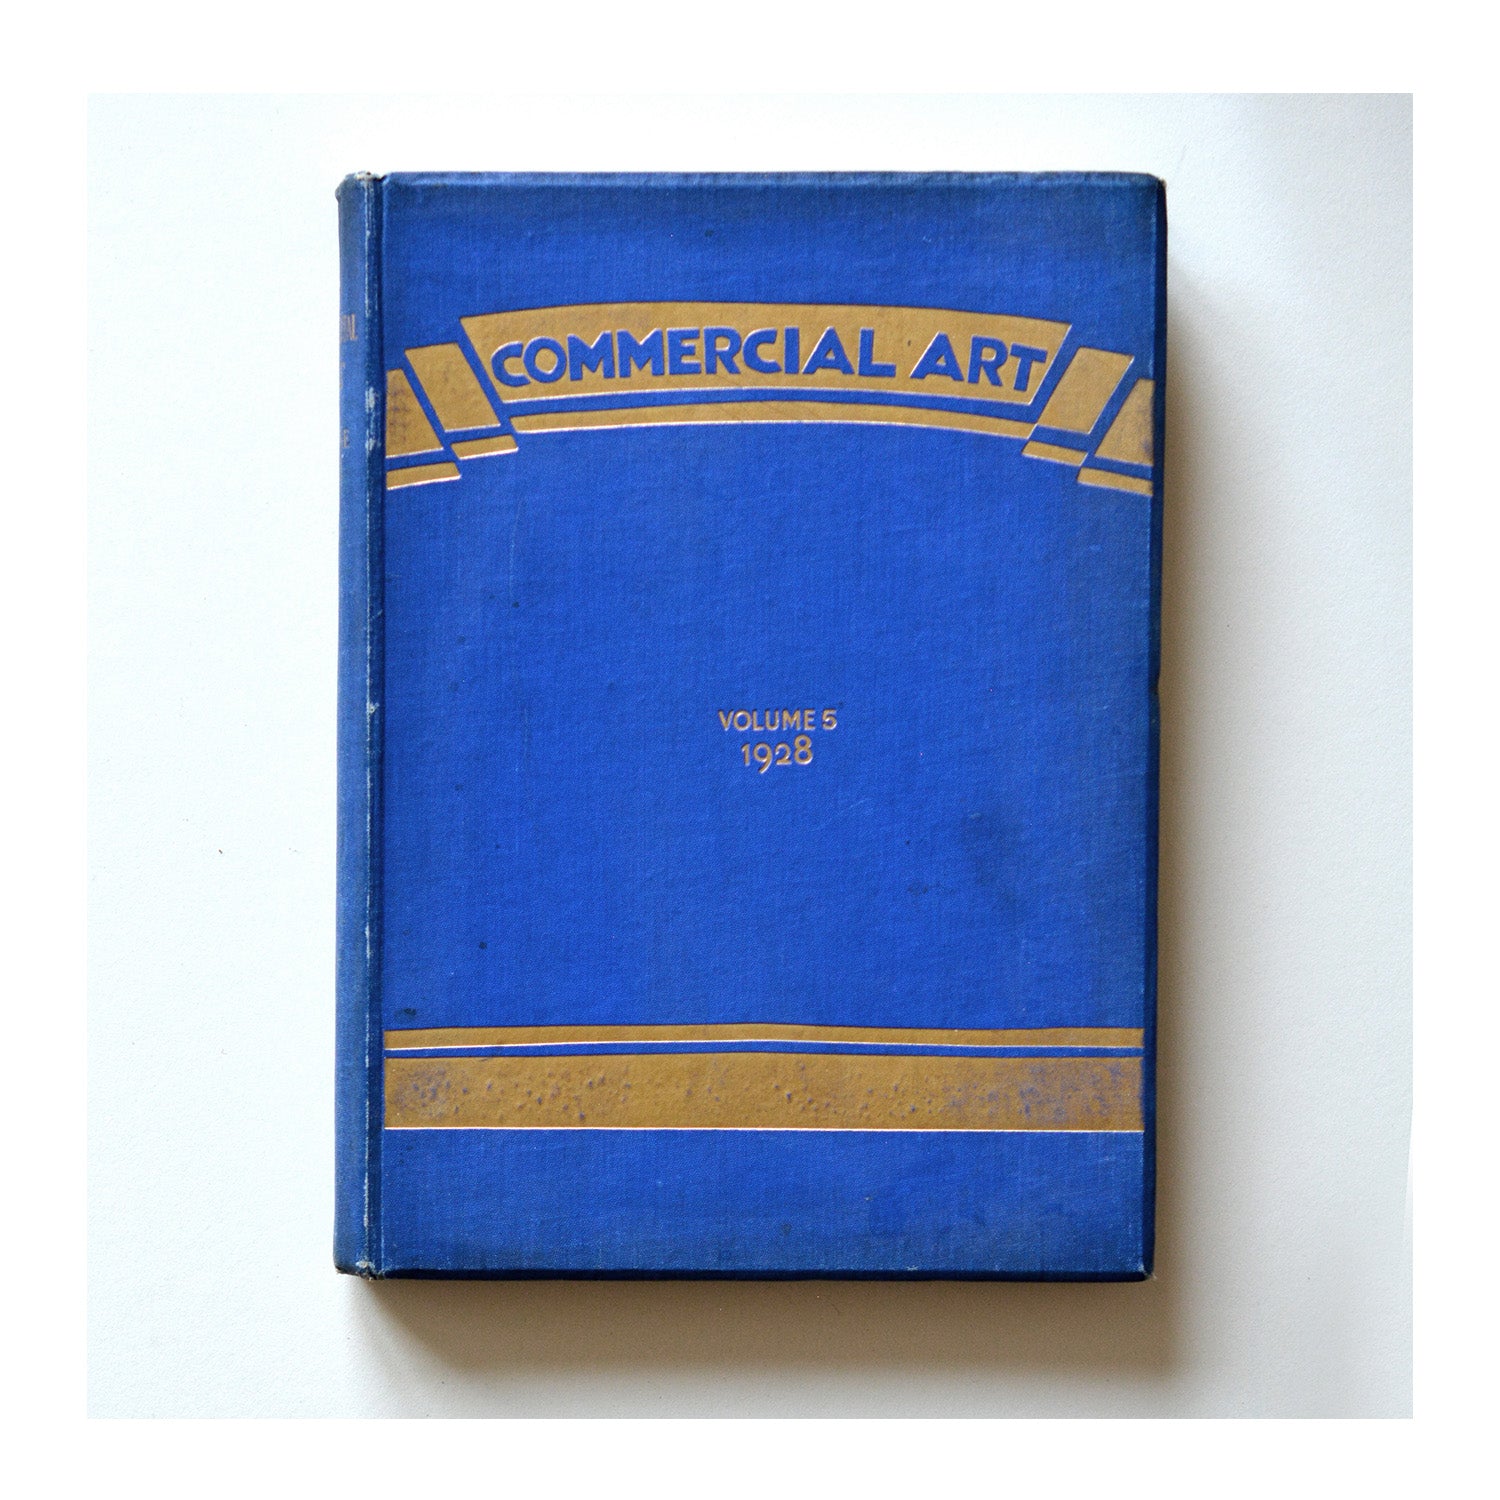 Commercial Art, Vol V, July - December 1928